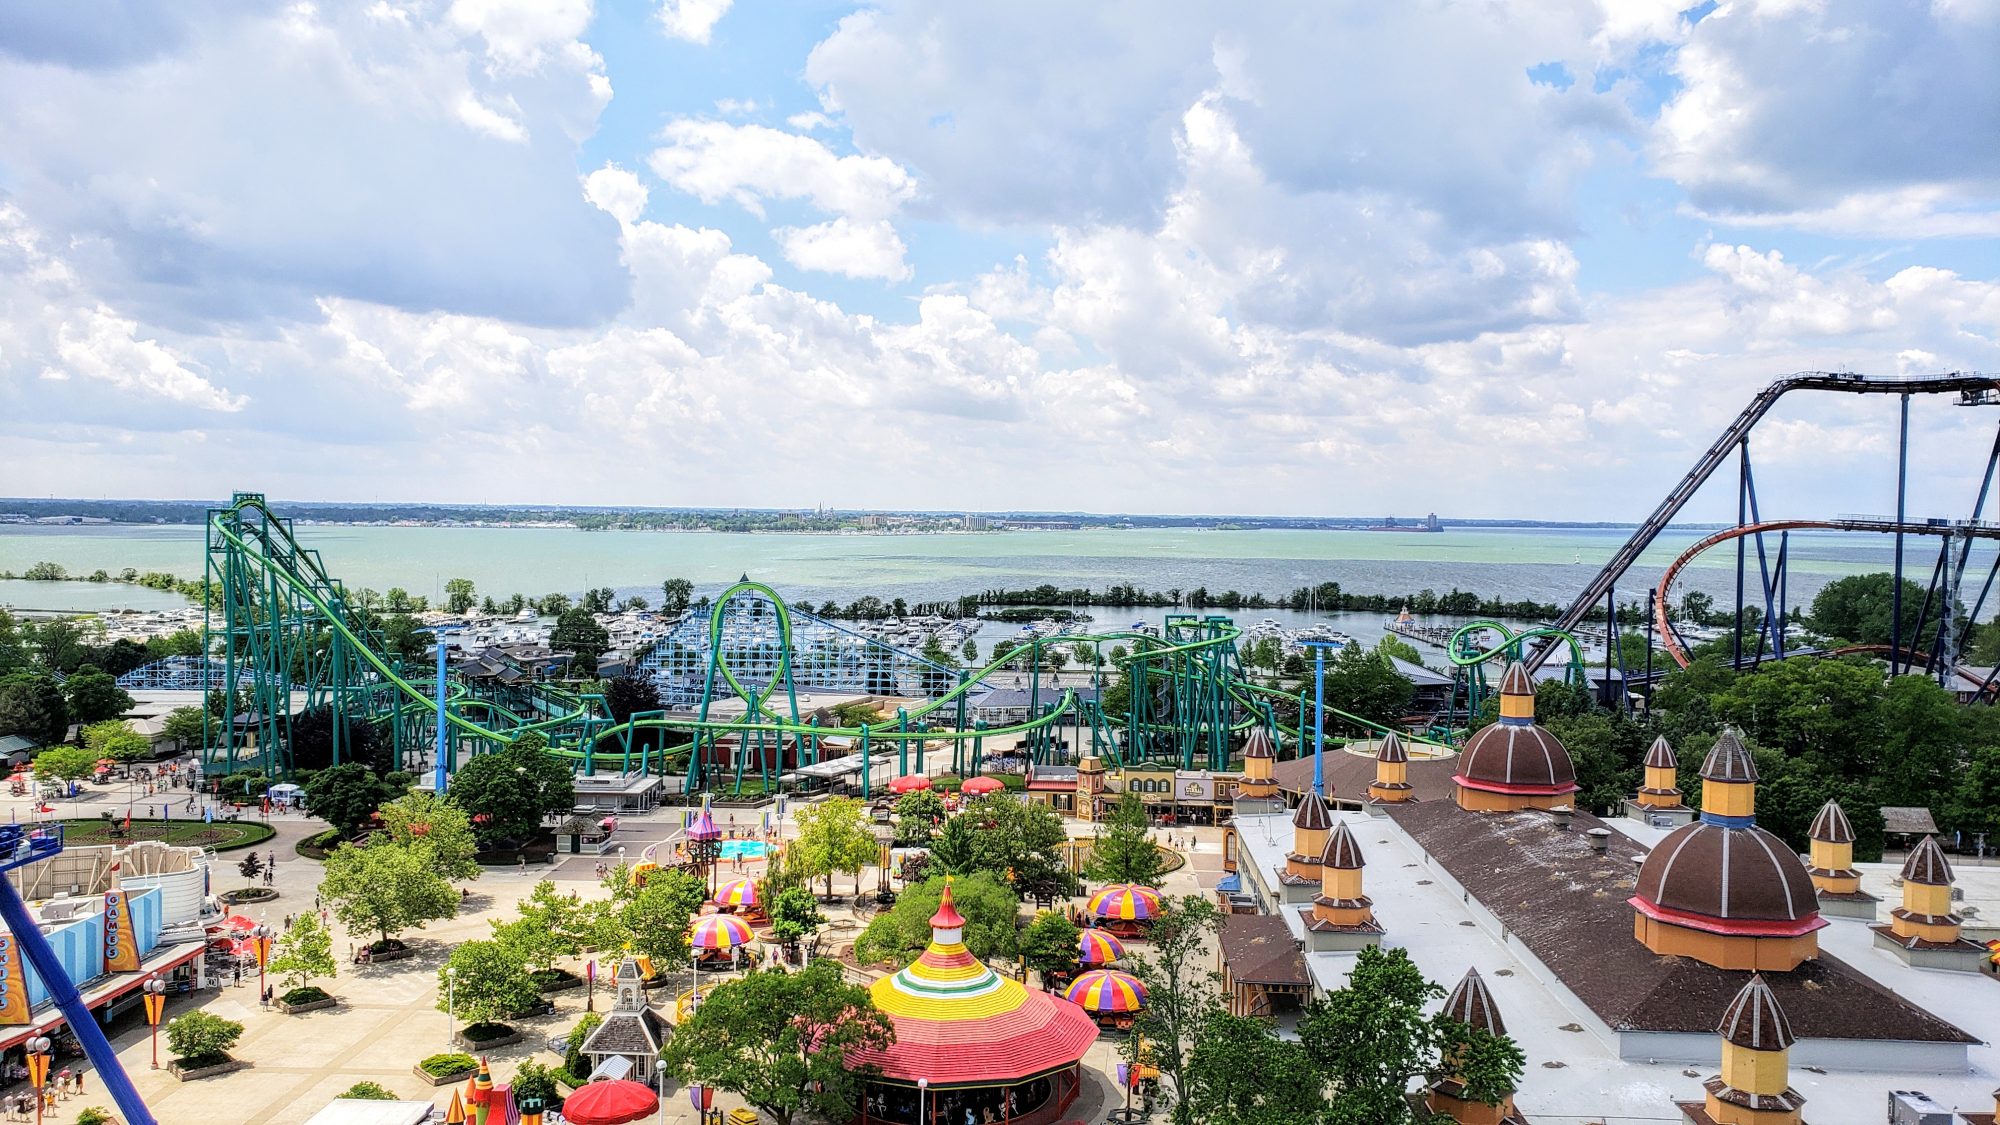 Cedar Point amusement park